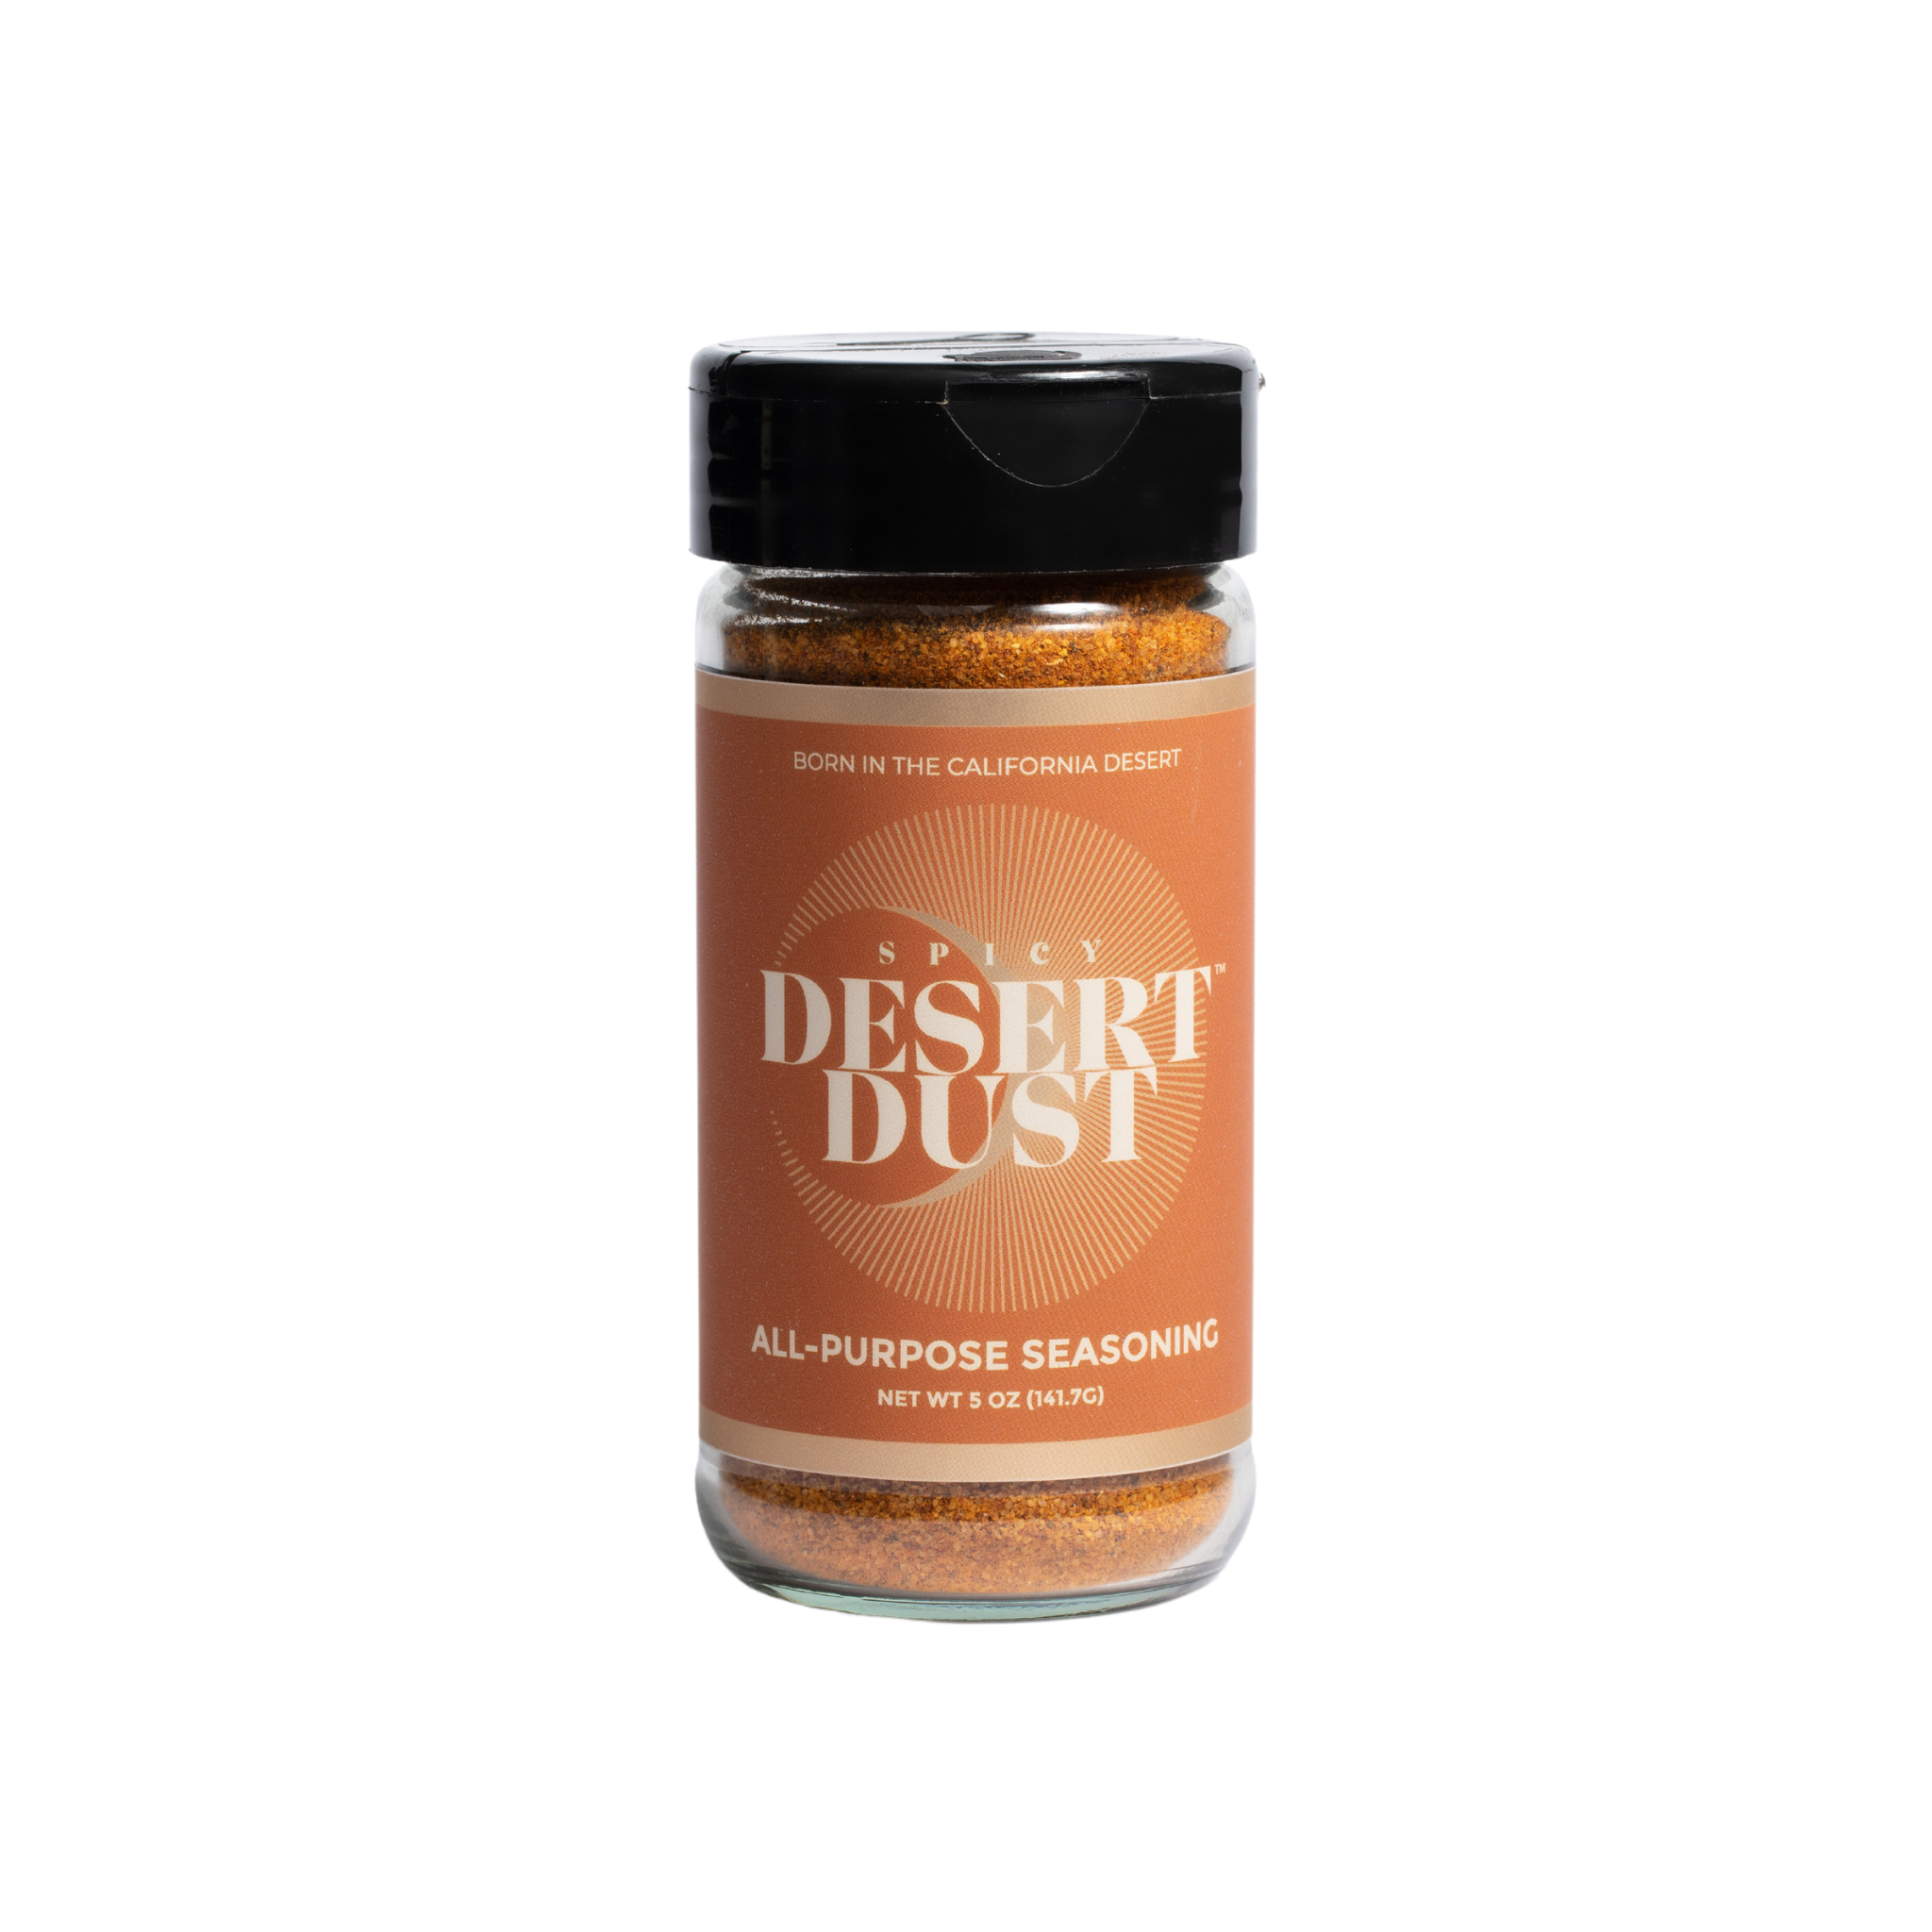 Spicy Desert Dust All-Purpose Seasoning